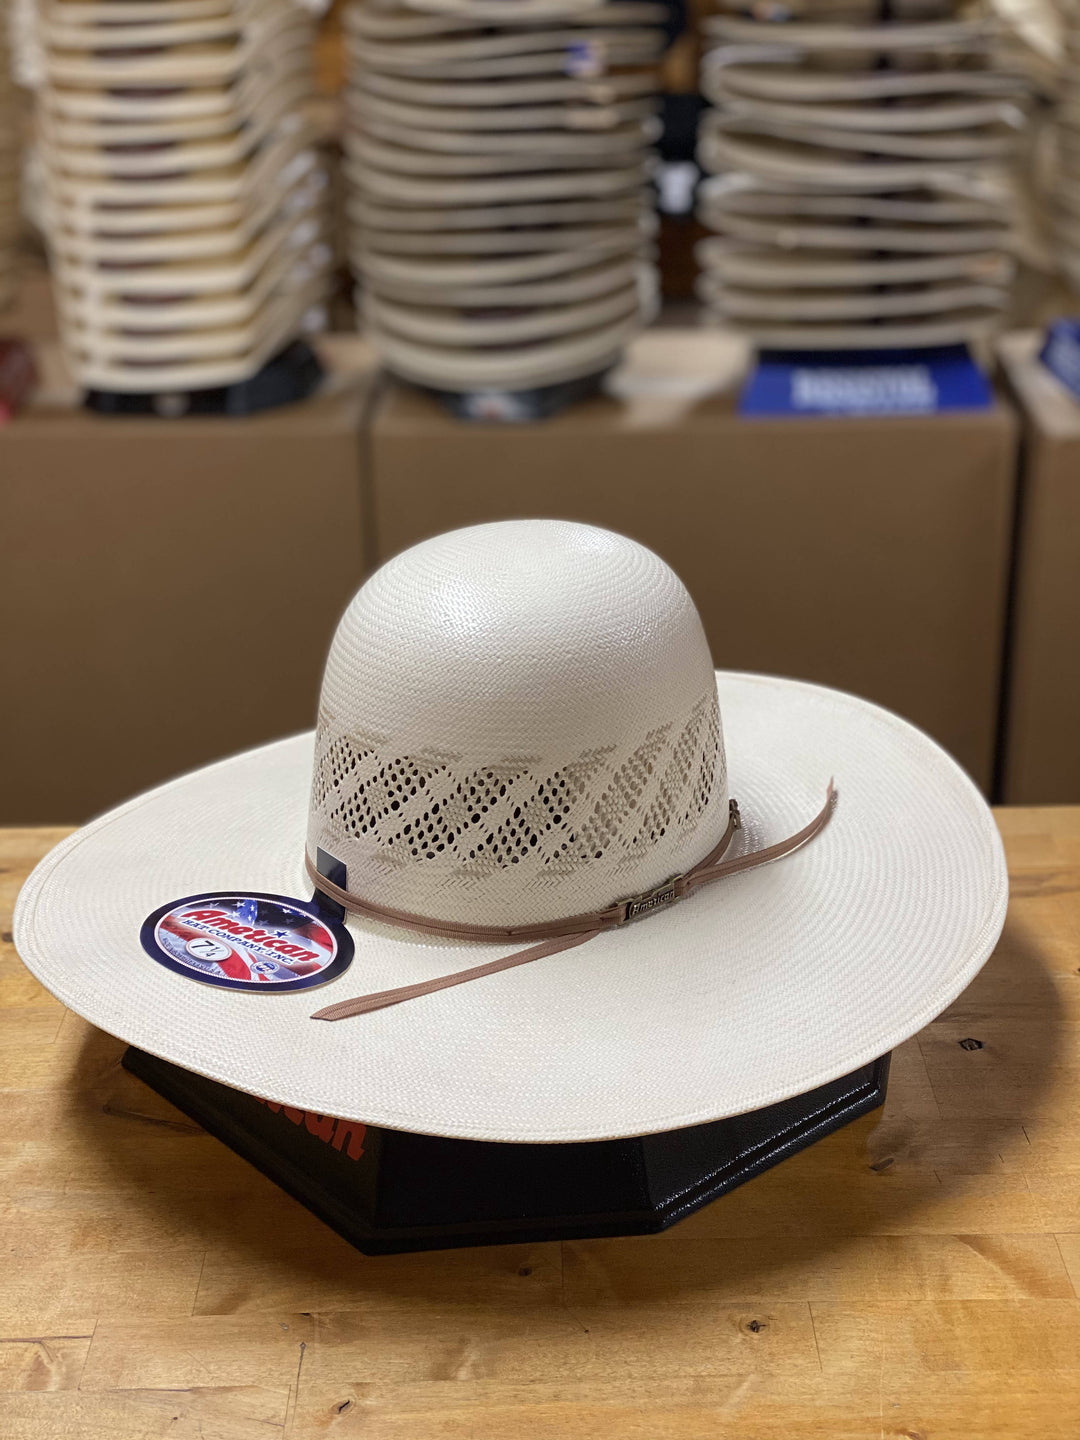 American Hat Company 6300 Straw Cowboy Hat